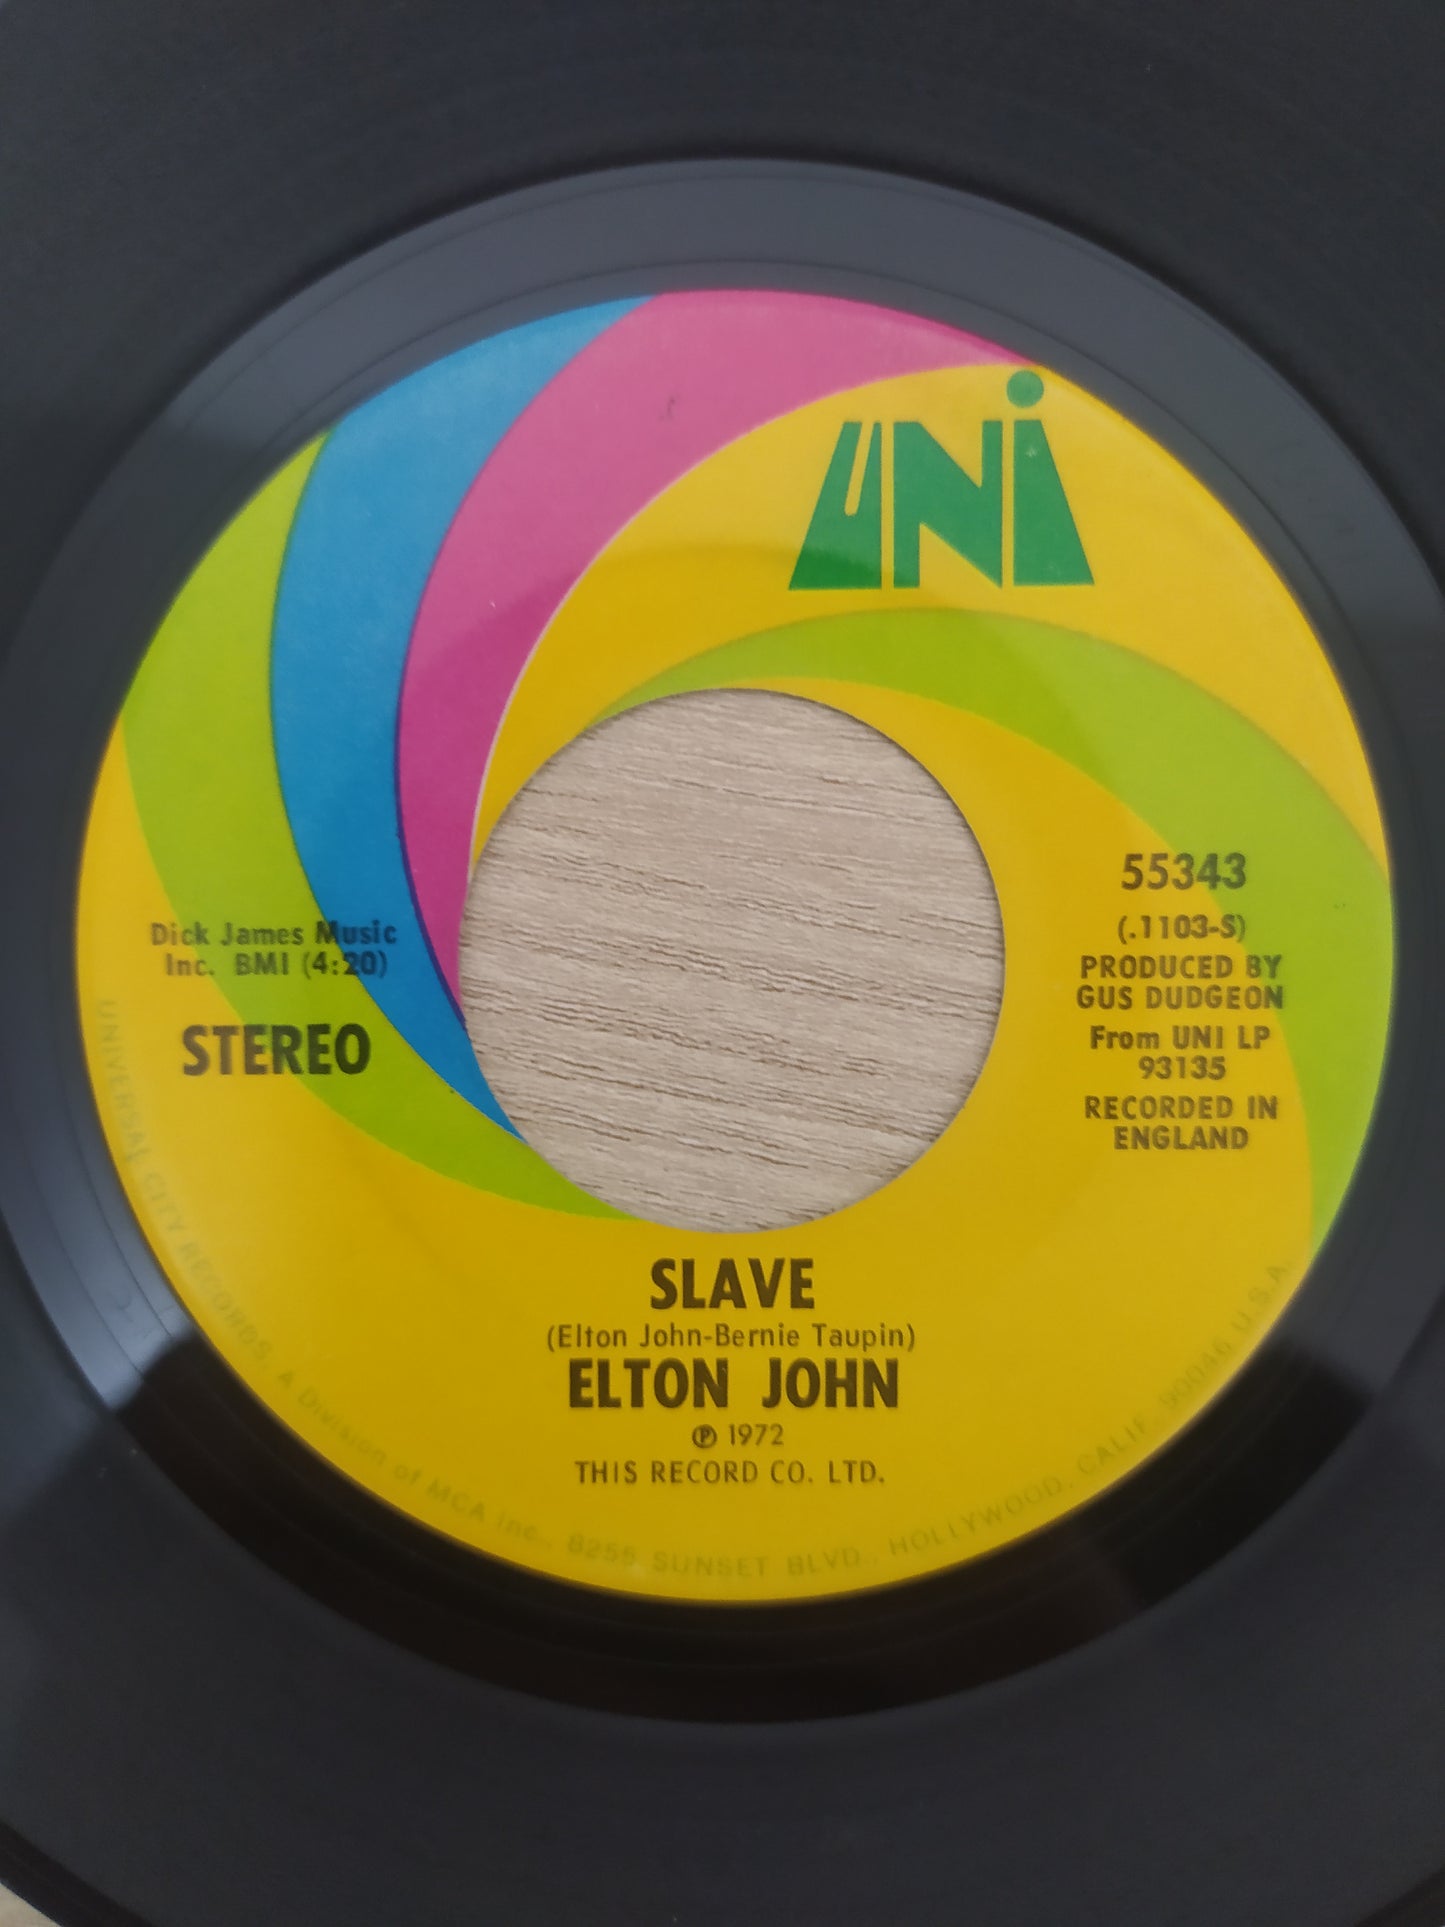 Vinil Compacto Elton John Honky Cat / Slave